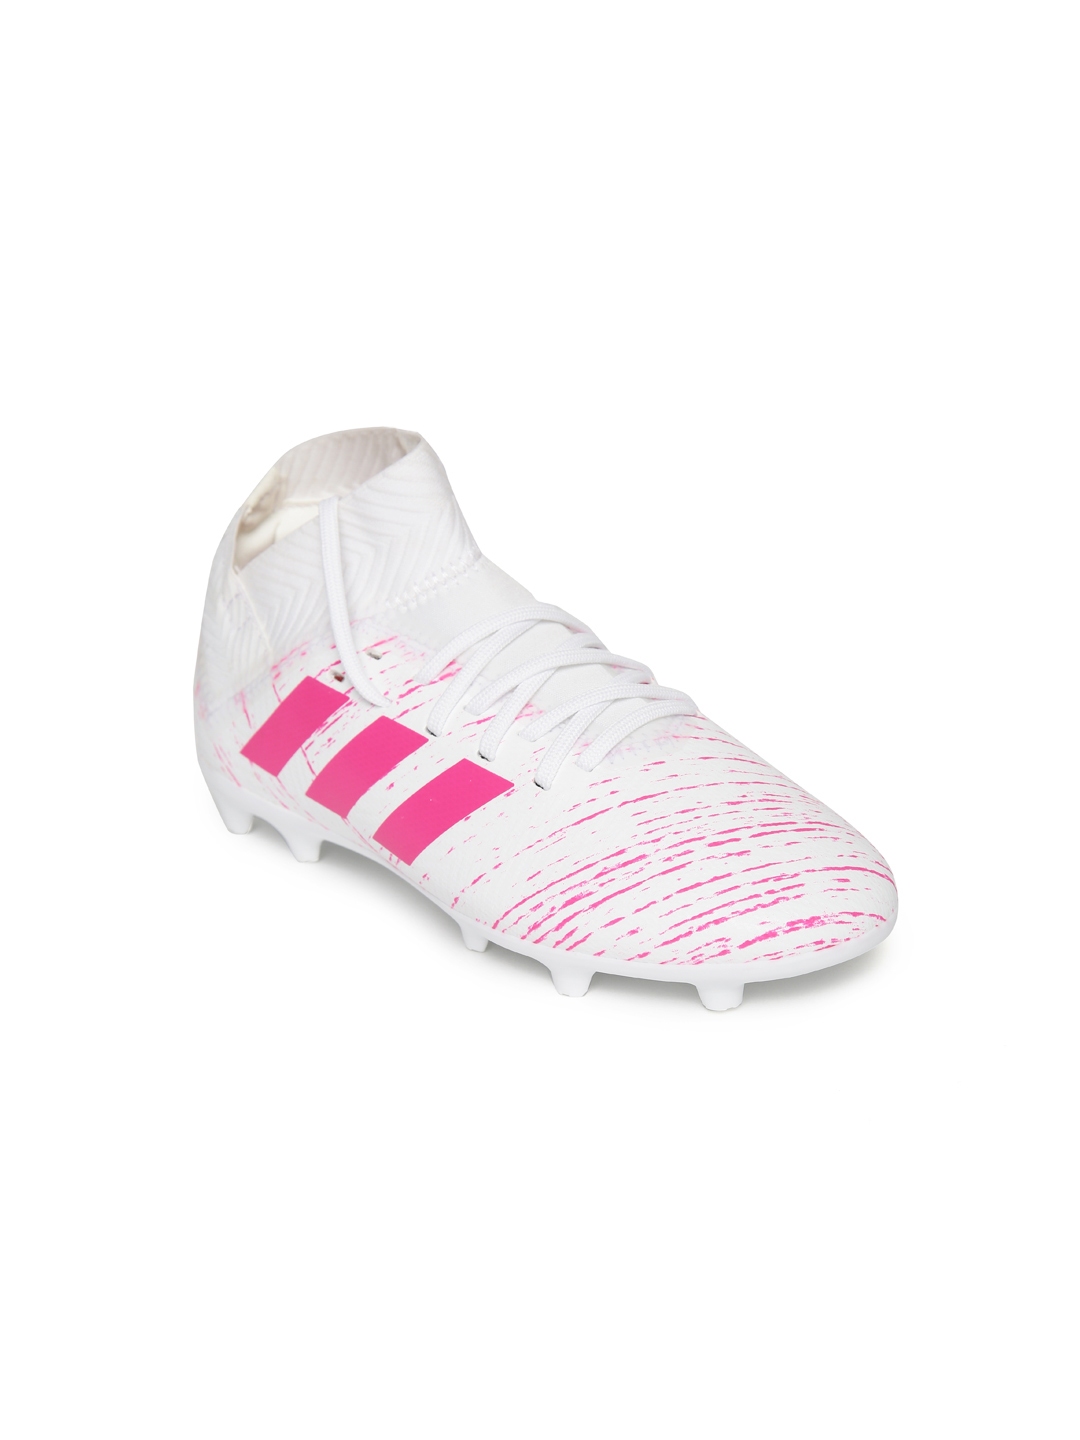 Buy Adidas Boys White Pink Nemeziz 18 3 Firm Ground Football